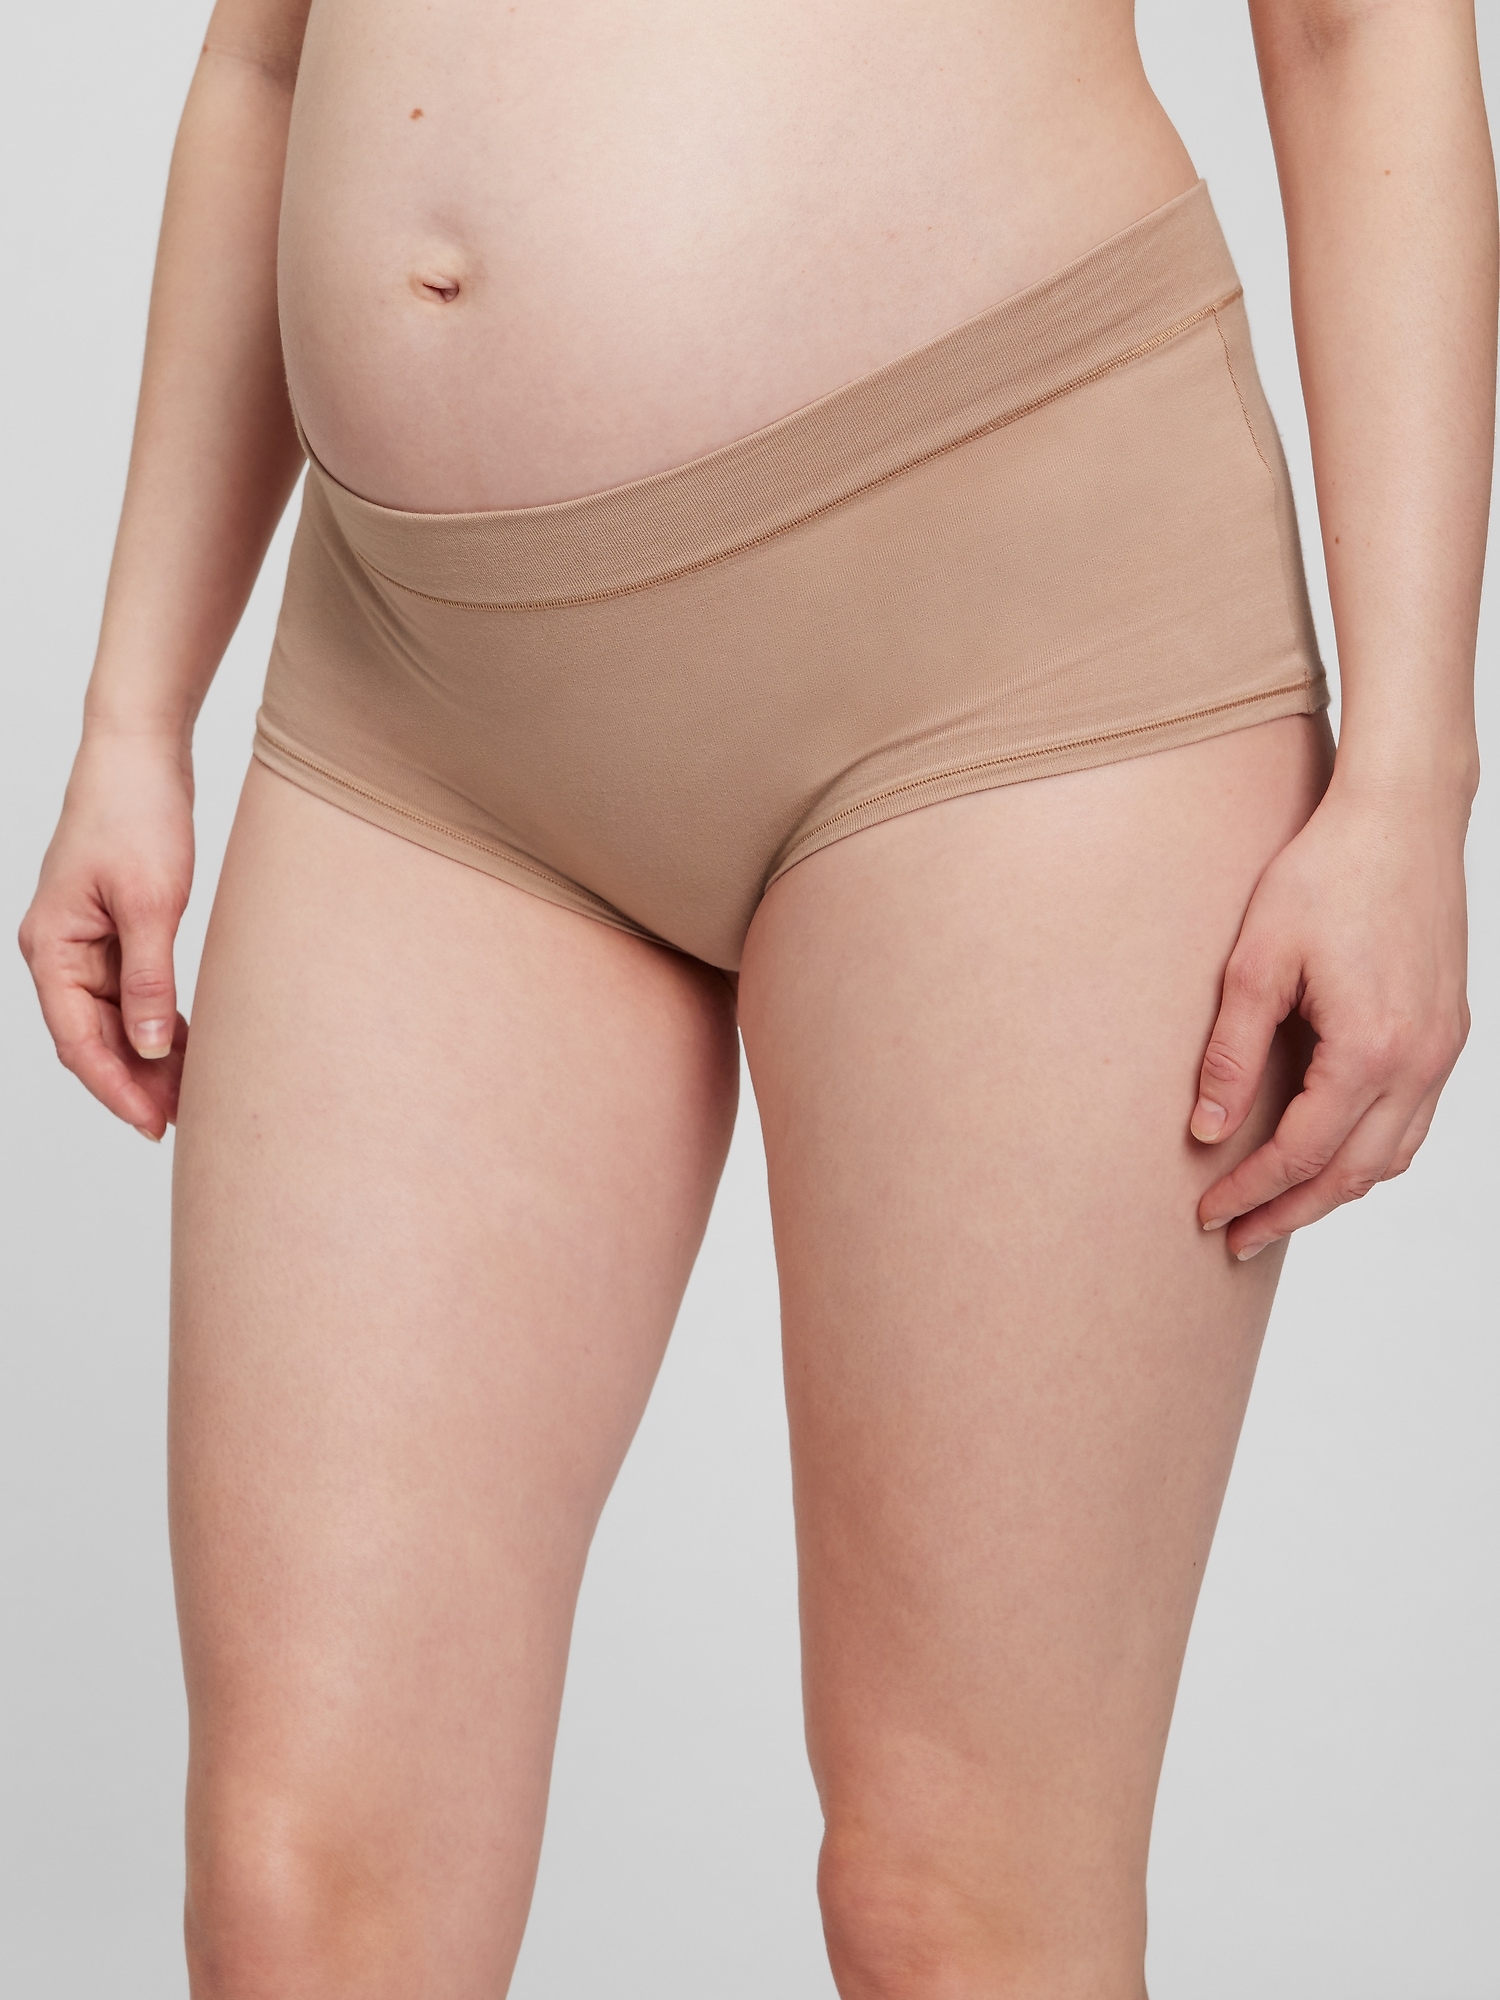 Maternity Briefs, Premium Maternity Underwear, Orthotix